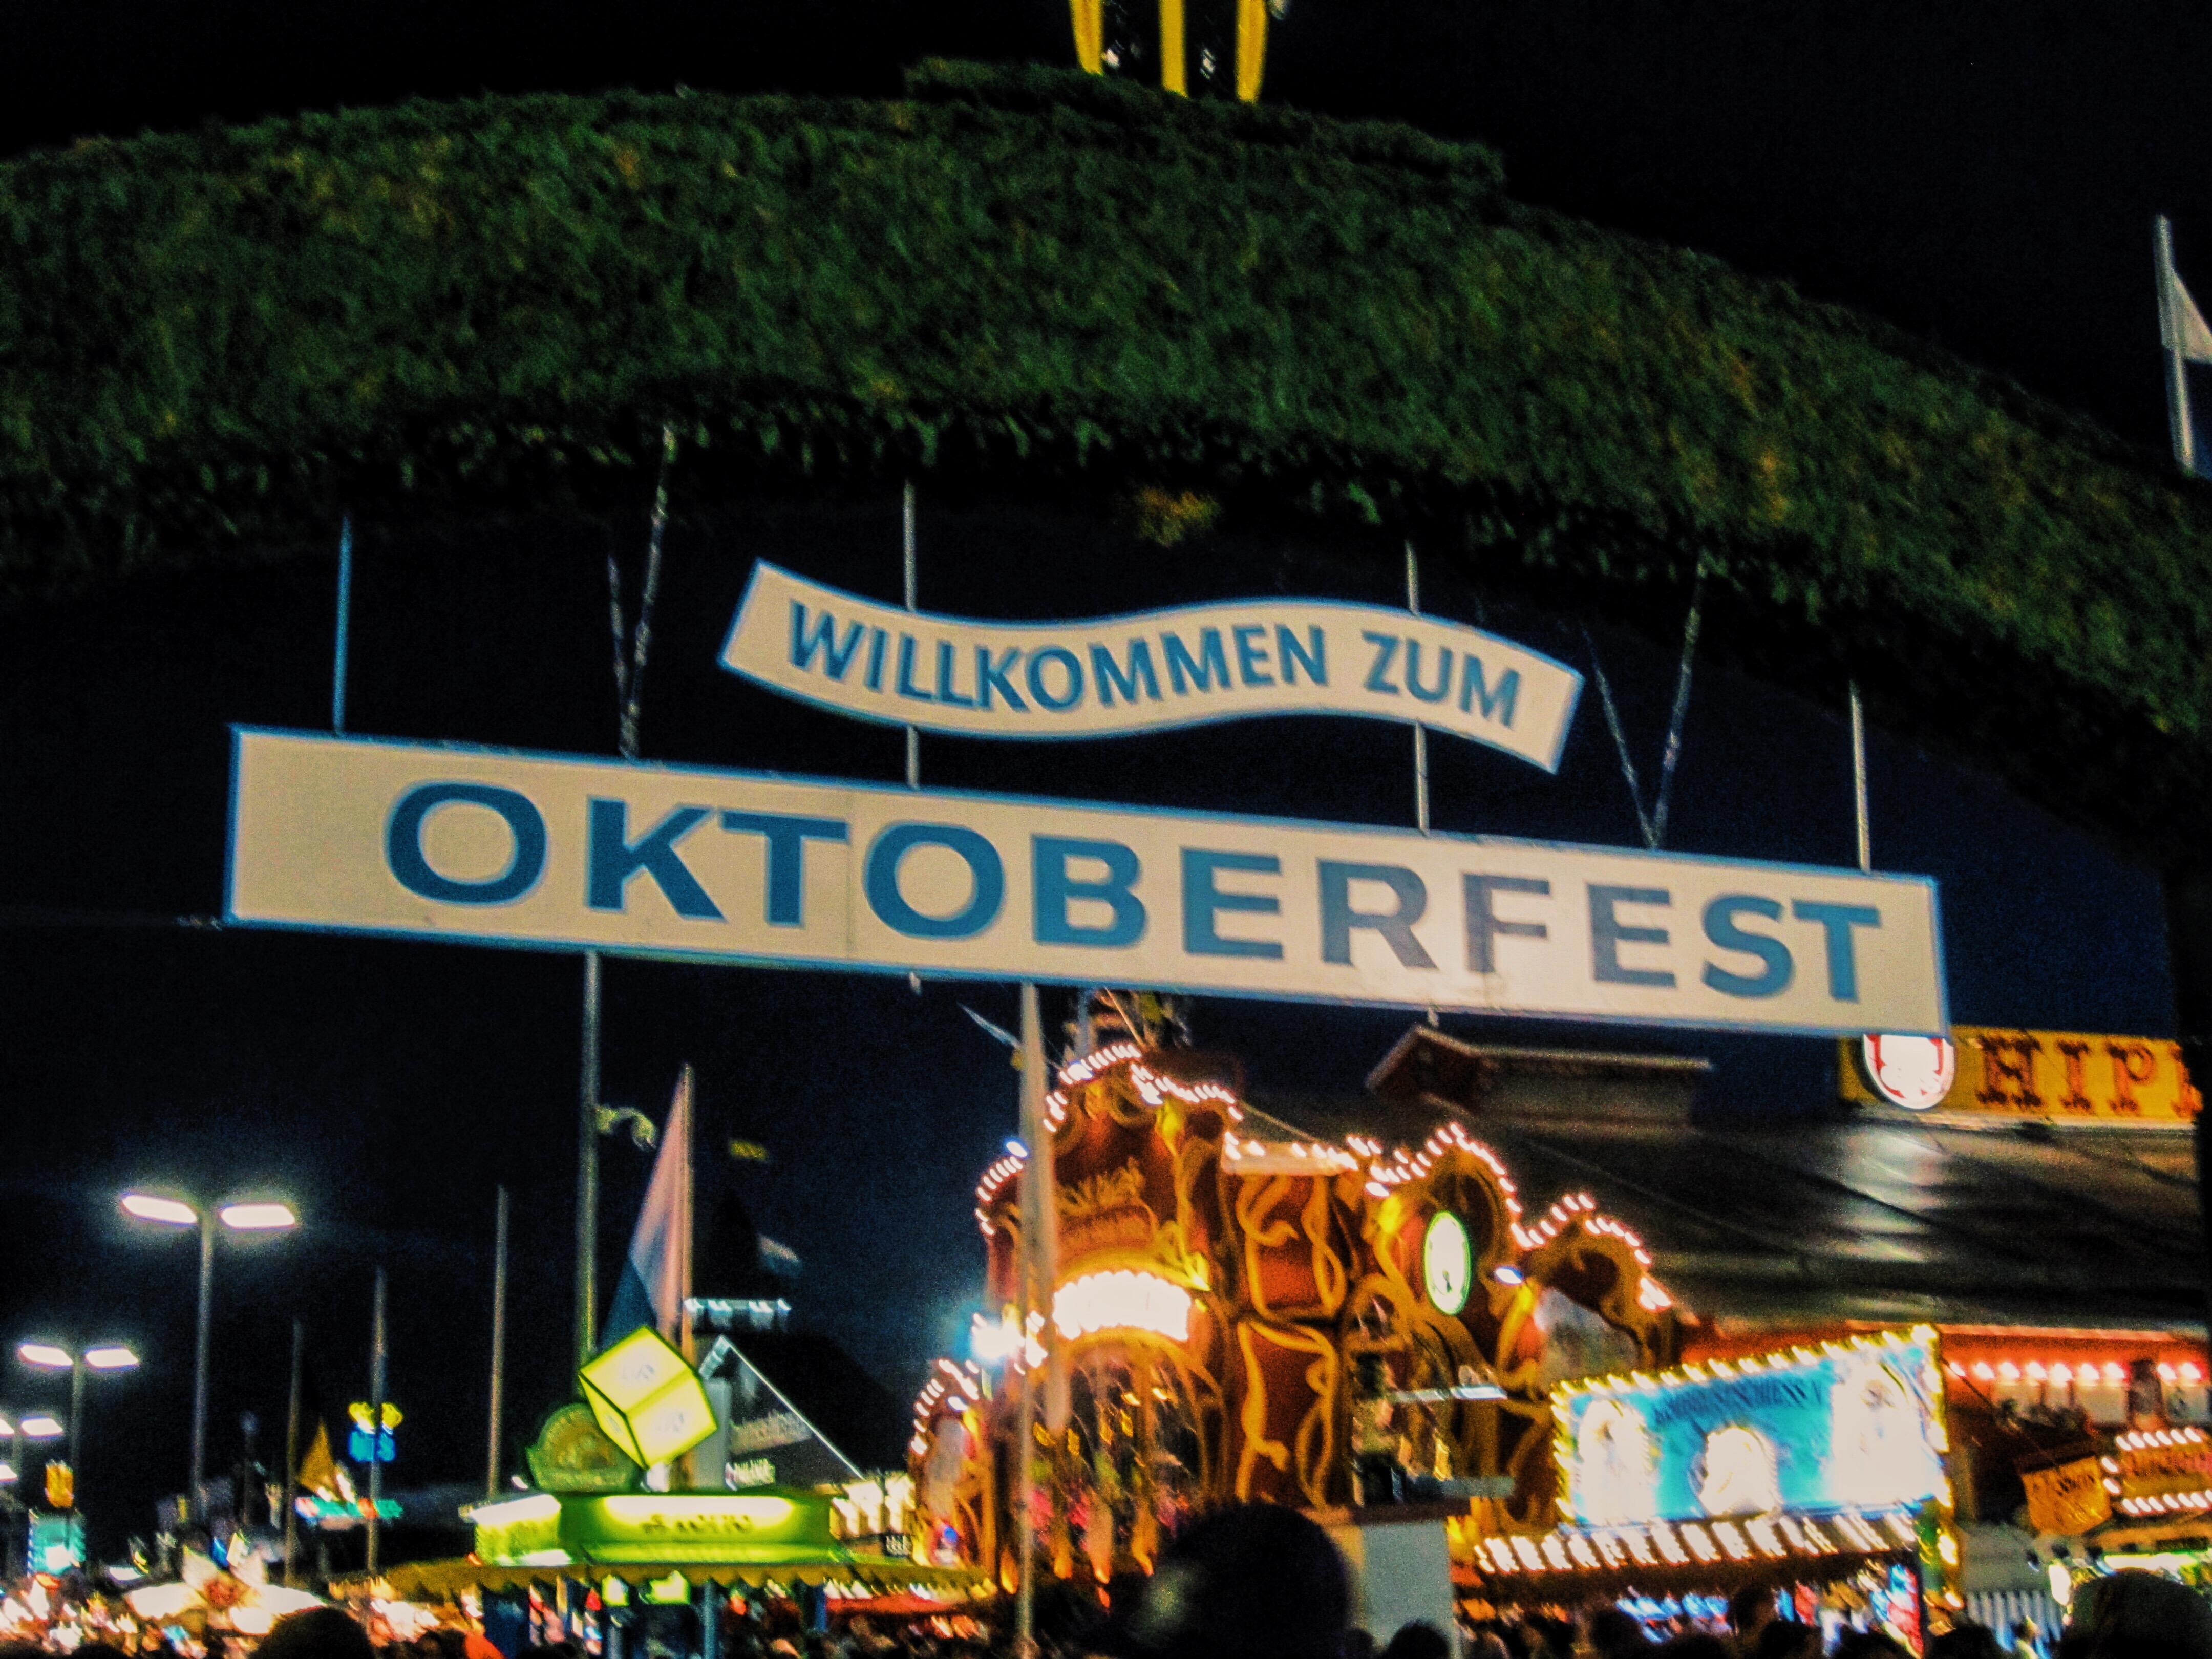 Oktoberfest Munich, Germany entrance